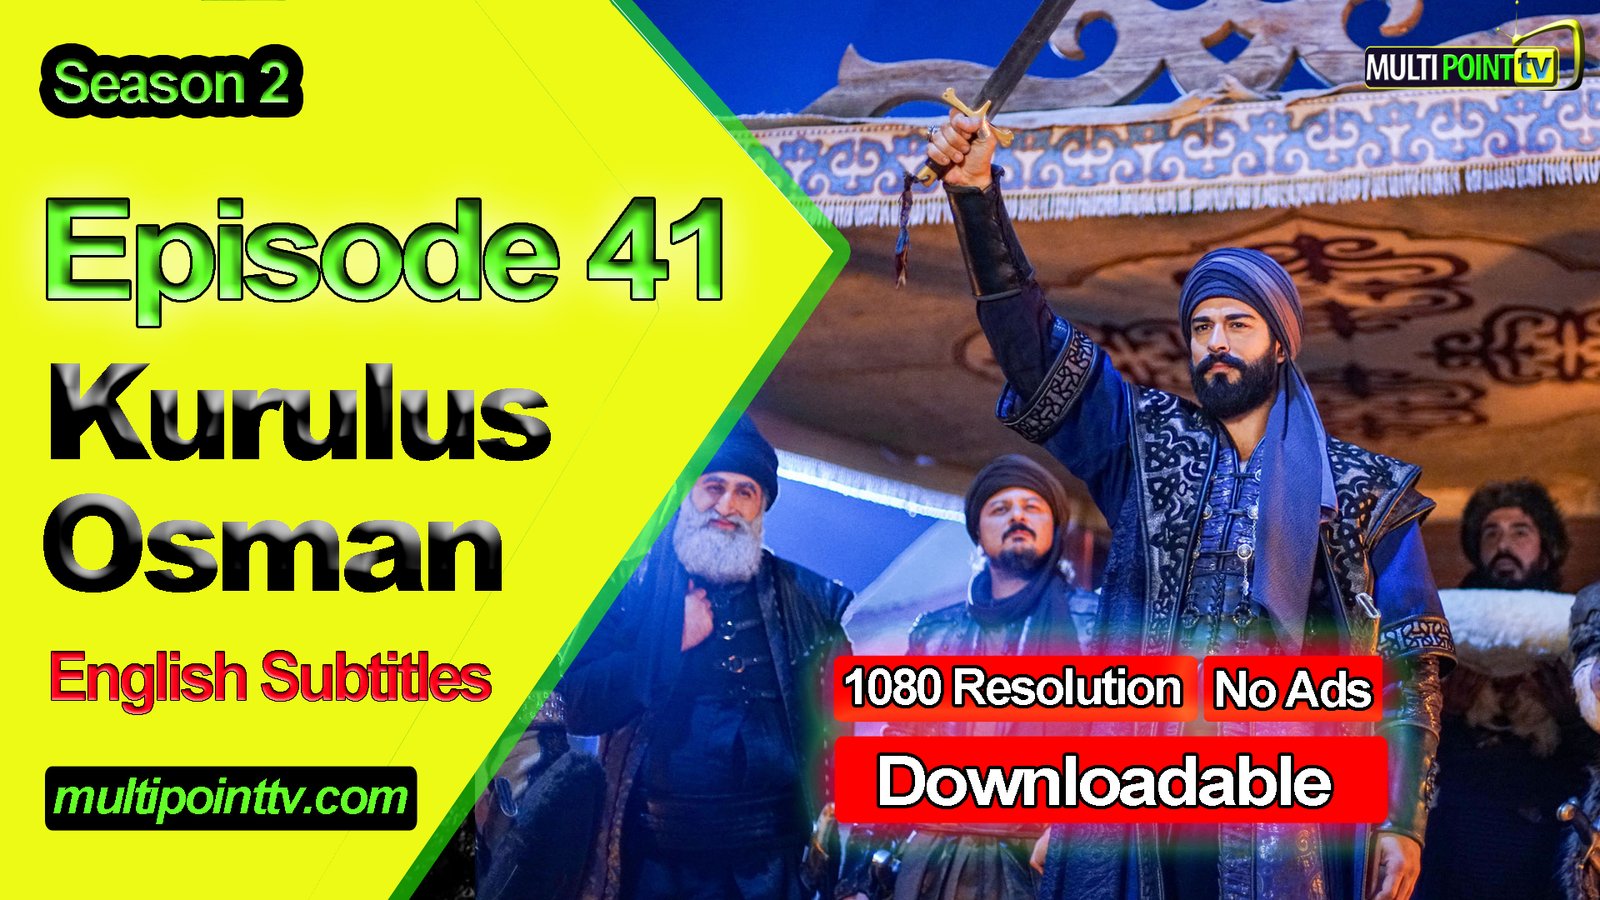 Kurulus Osman Episode 41 English Subtitles